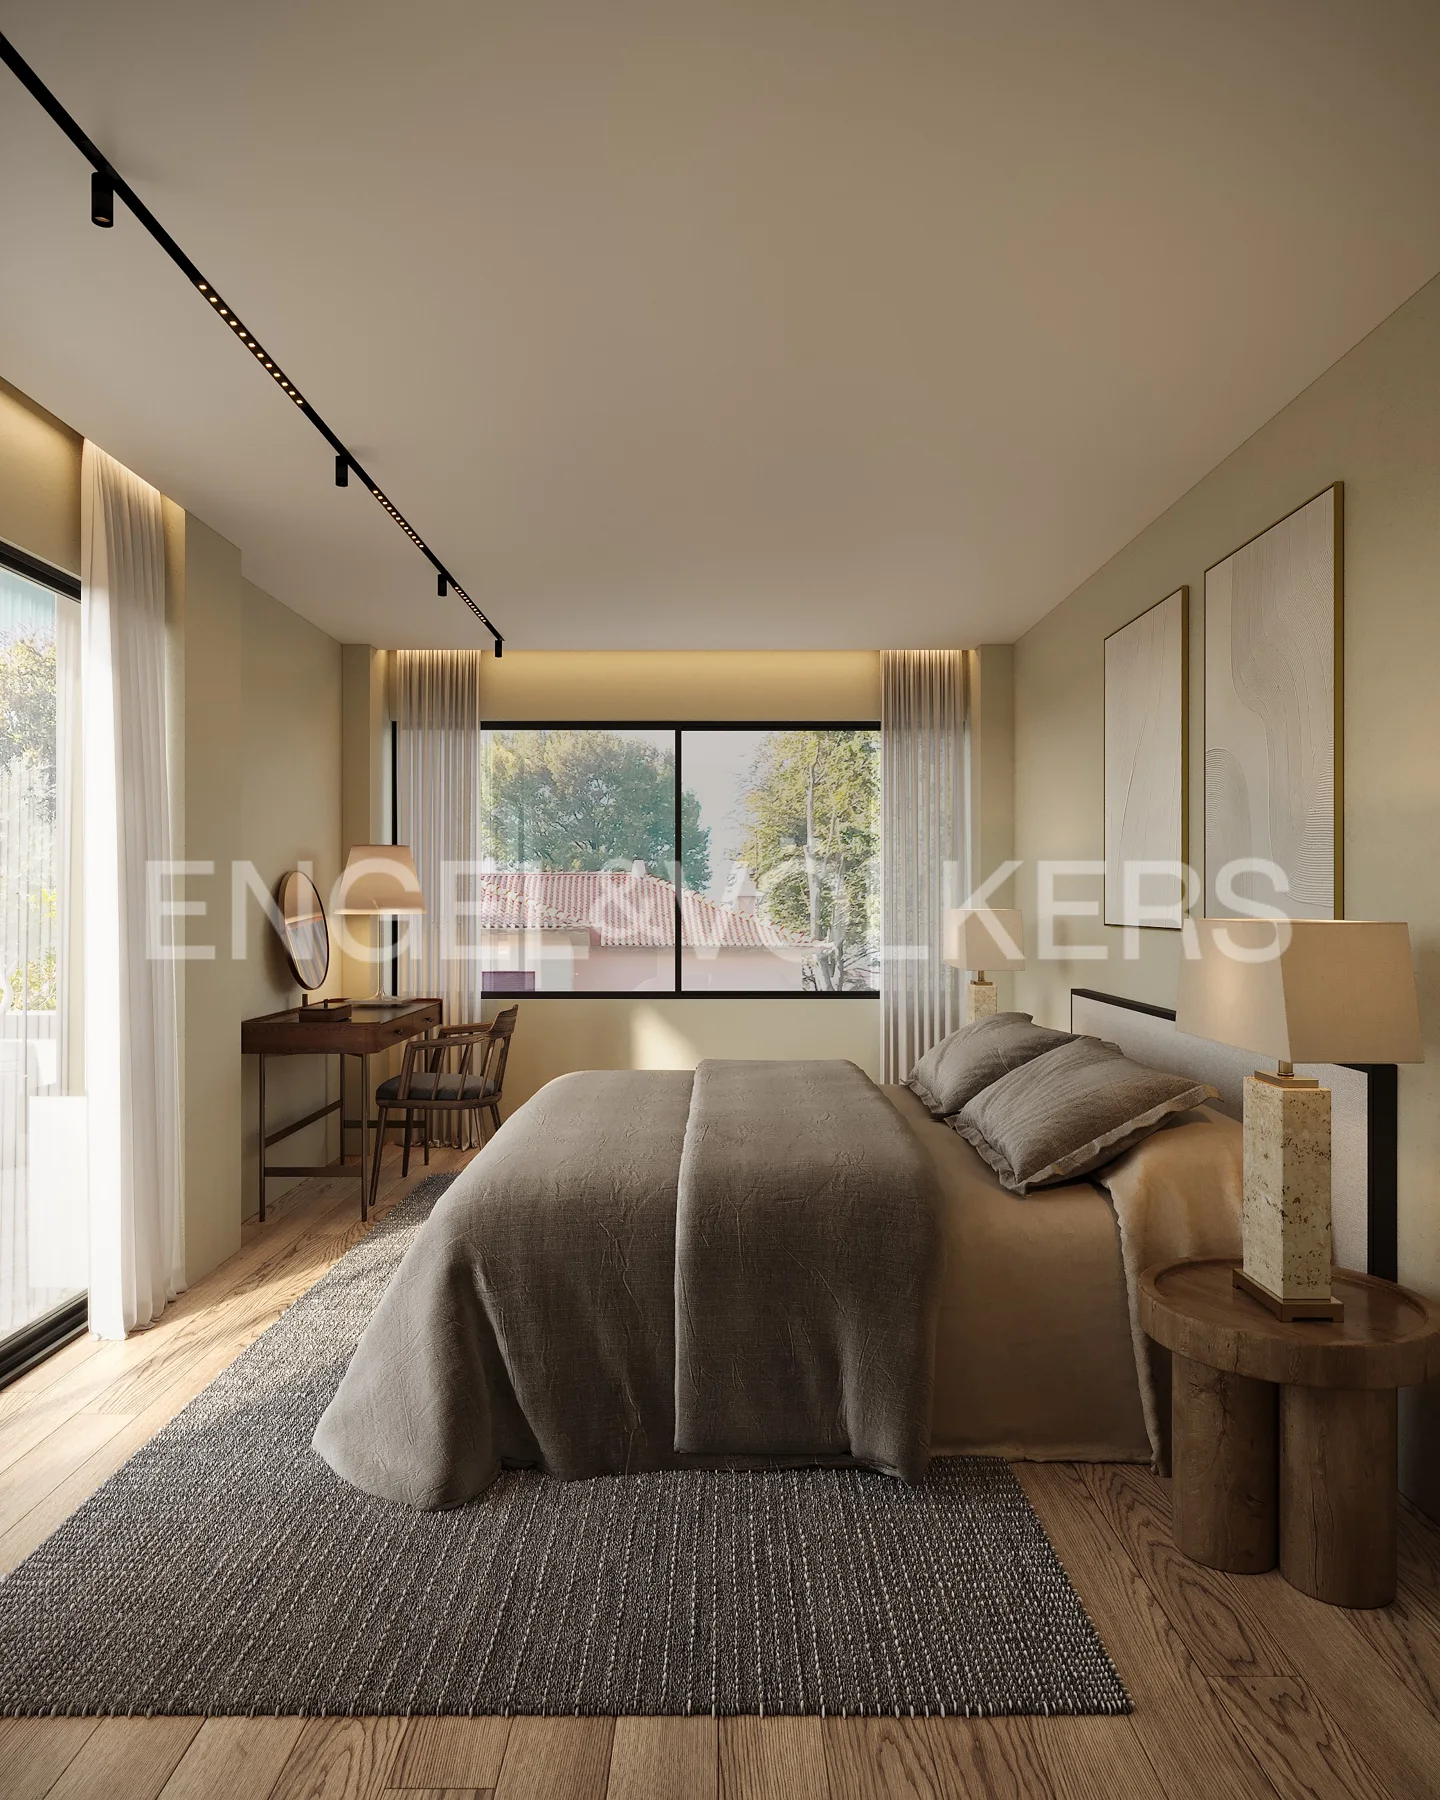 3 Bedroom Apartment with terrace - New Development Art House Boavista